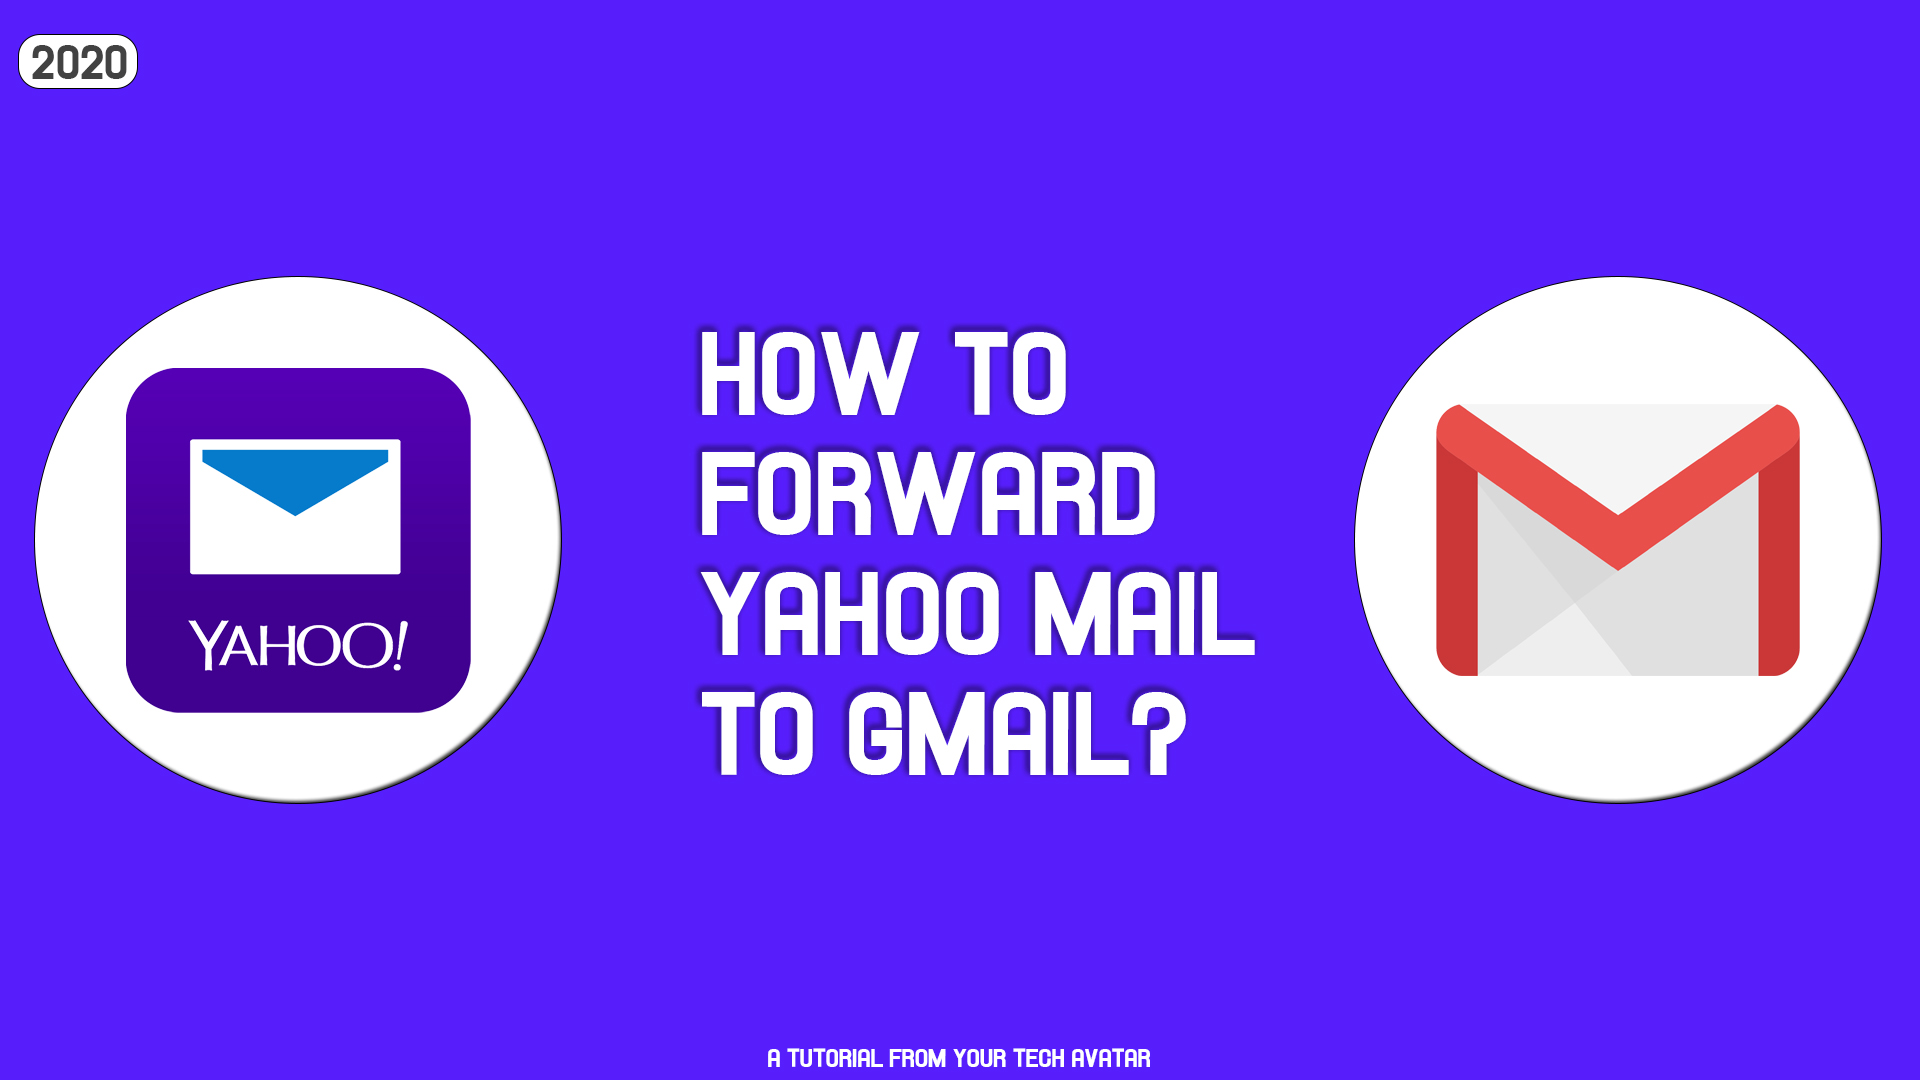 Forward Yahoo Mail to Gmail